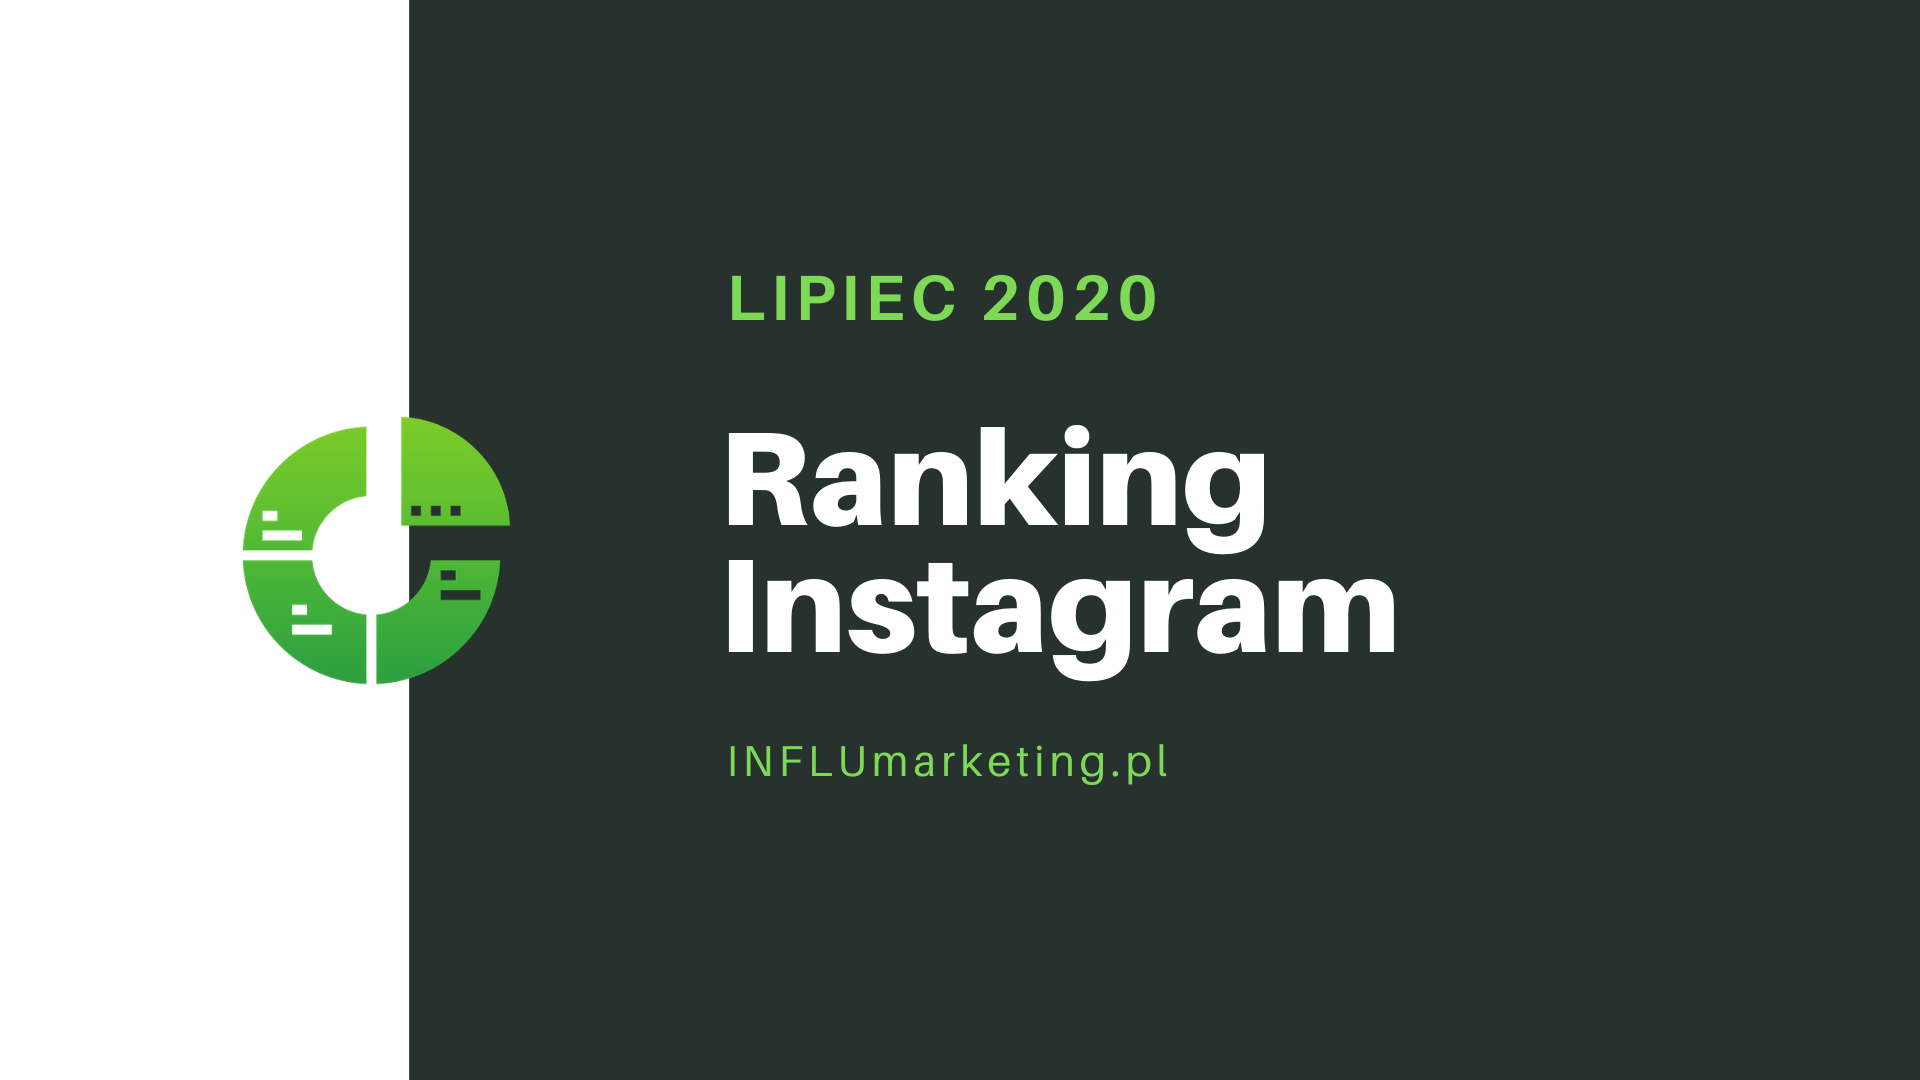 ranking instagram polska lipiec 2020 cover photo